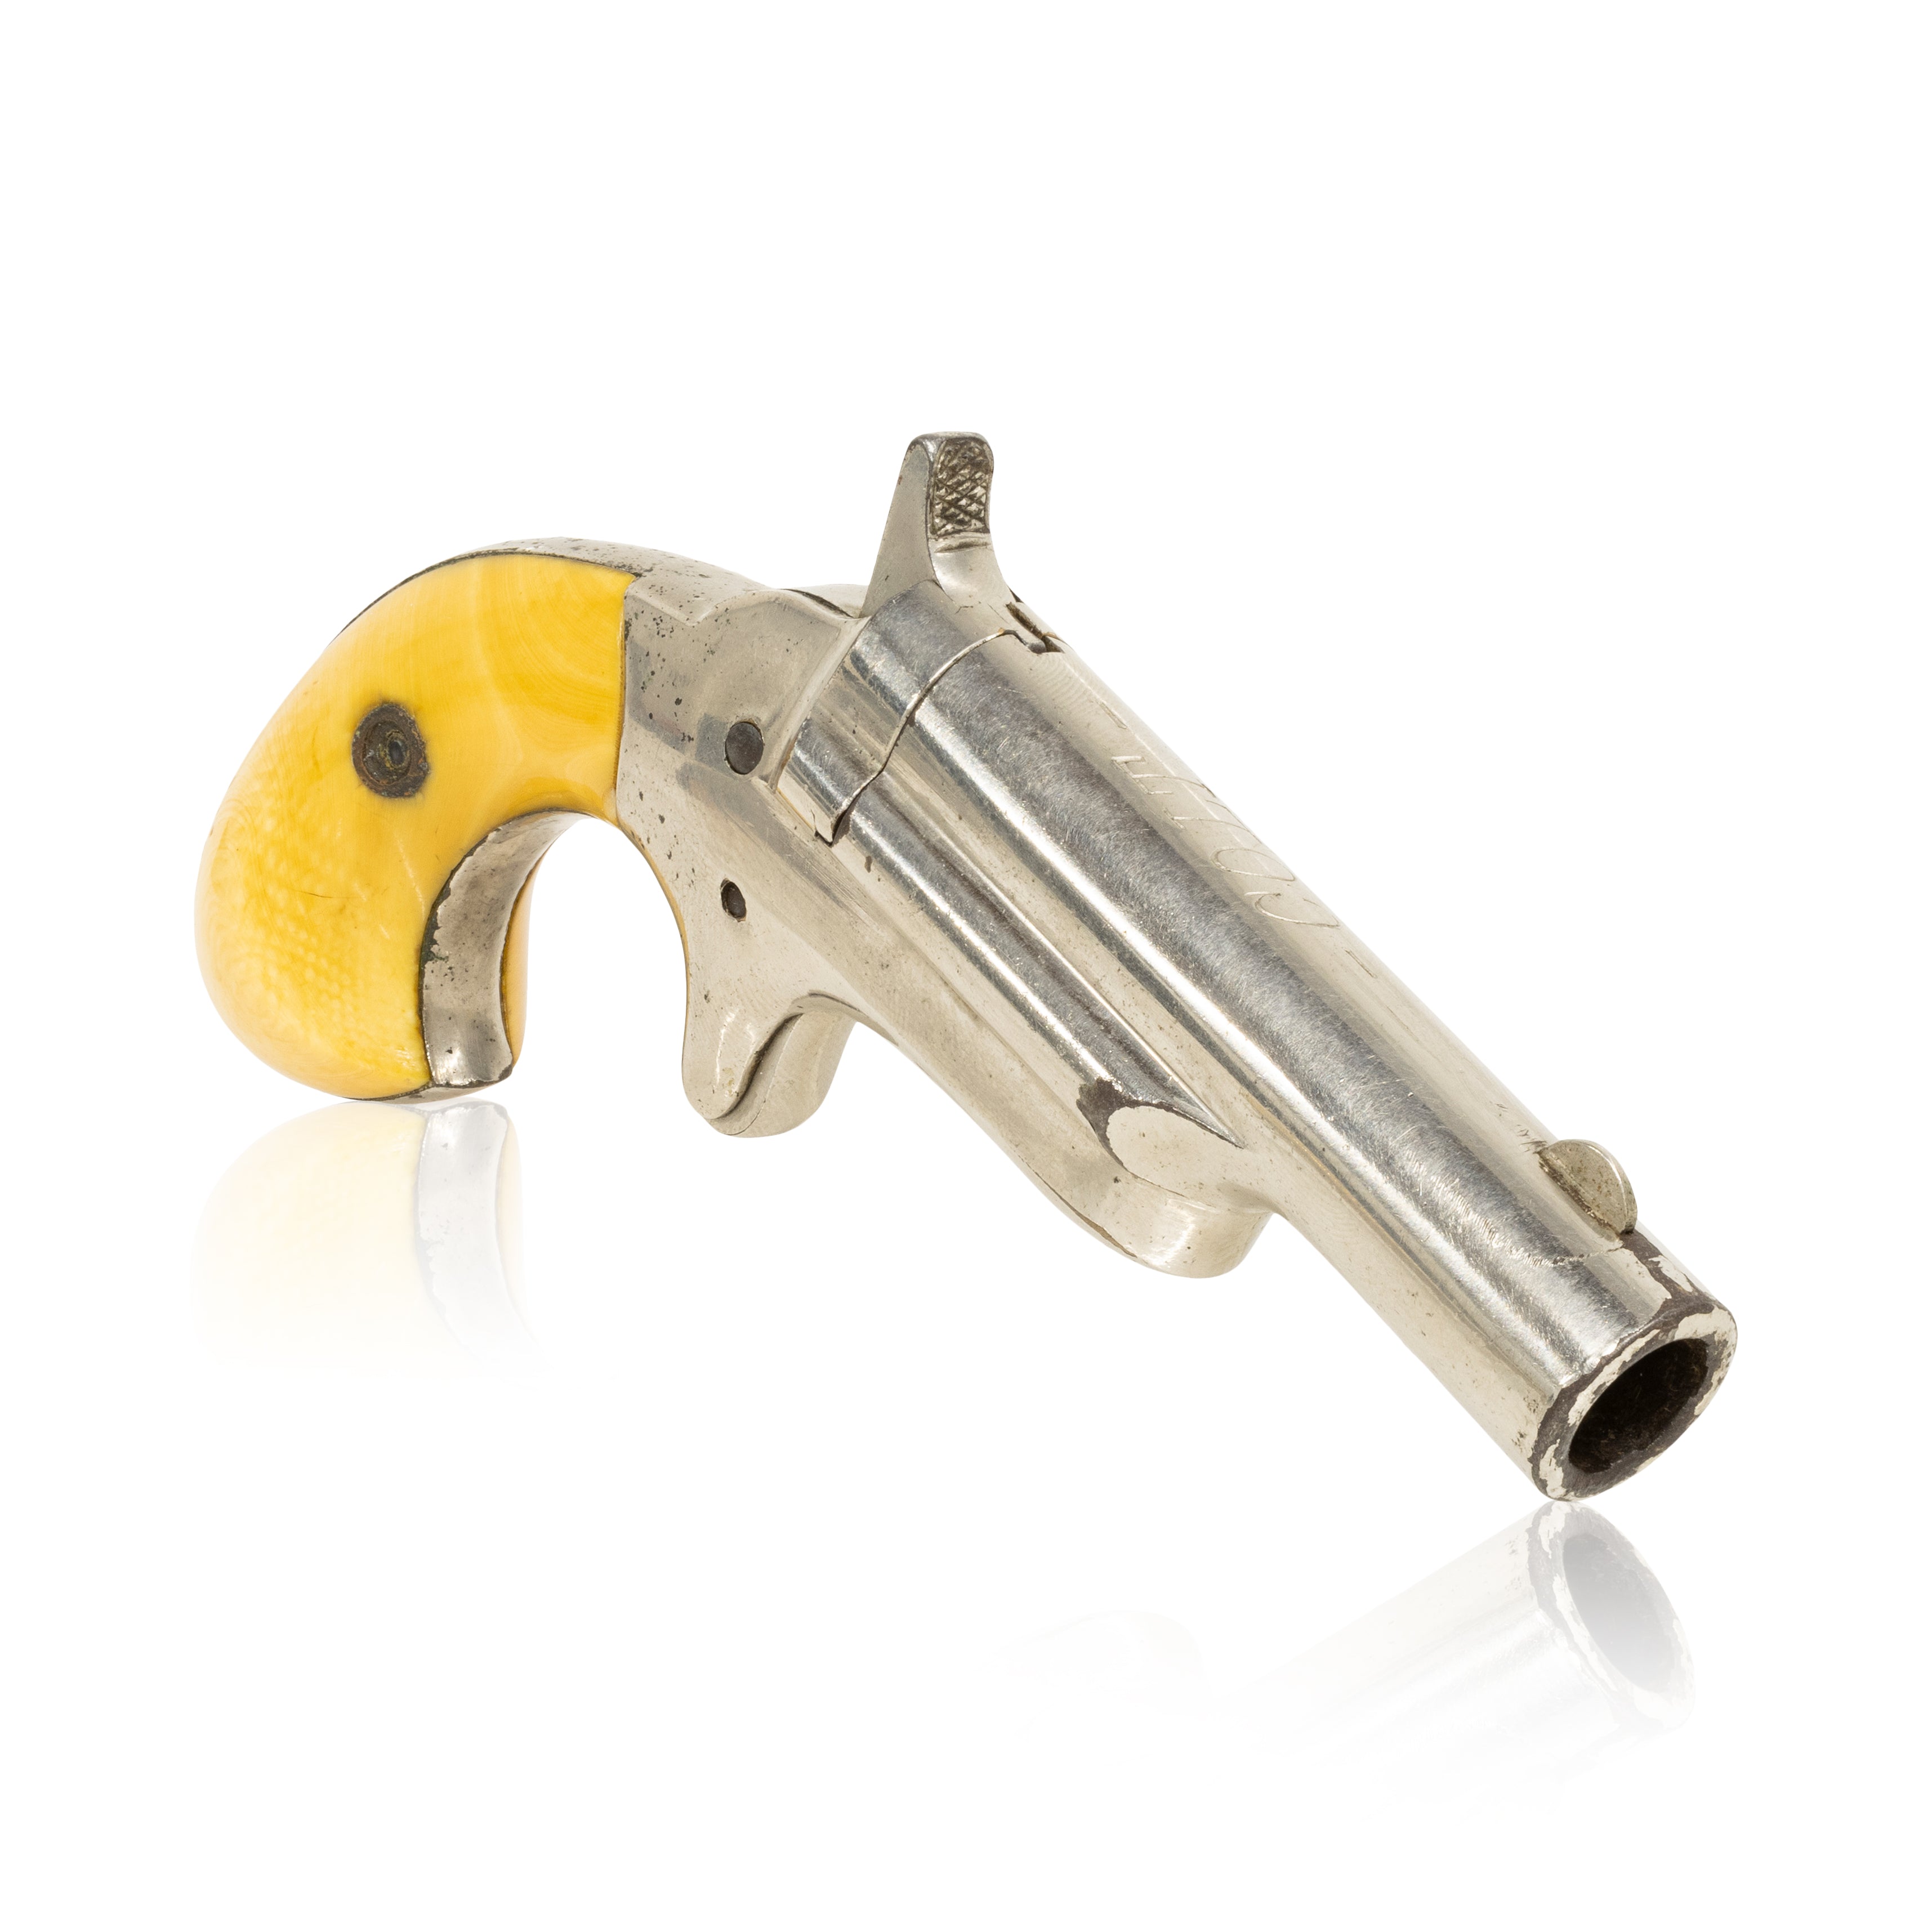 Cased Pair of Colt Third Model Derringer Pocket Pistols